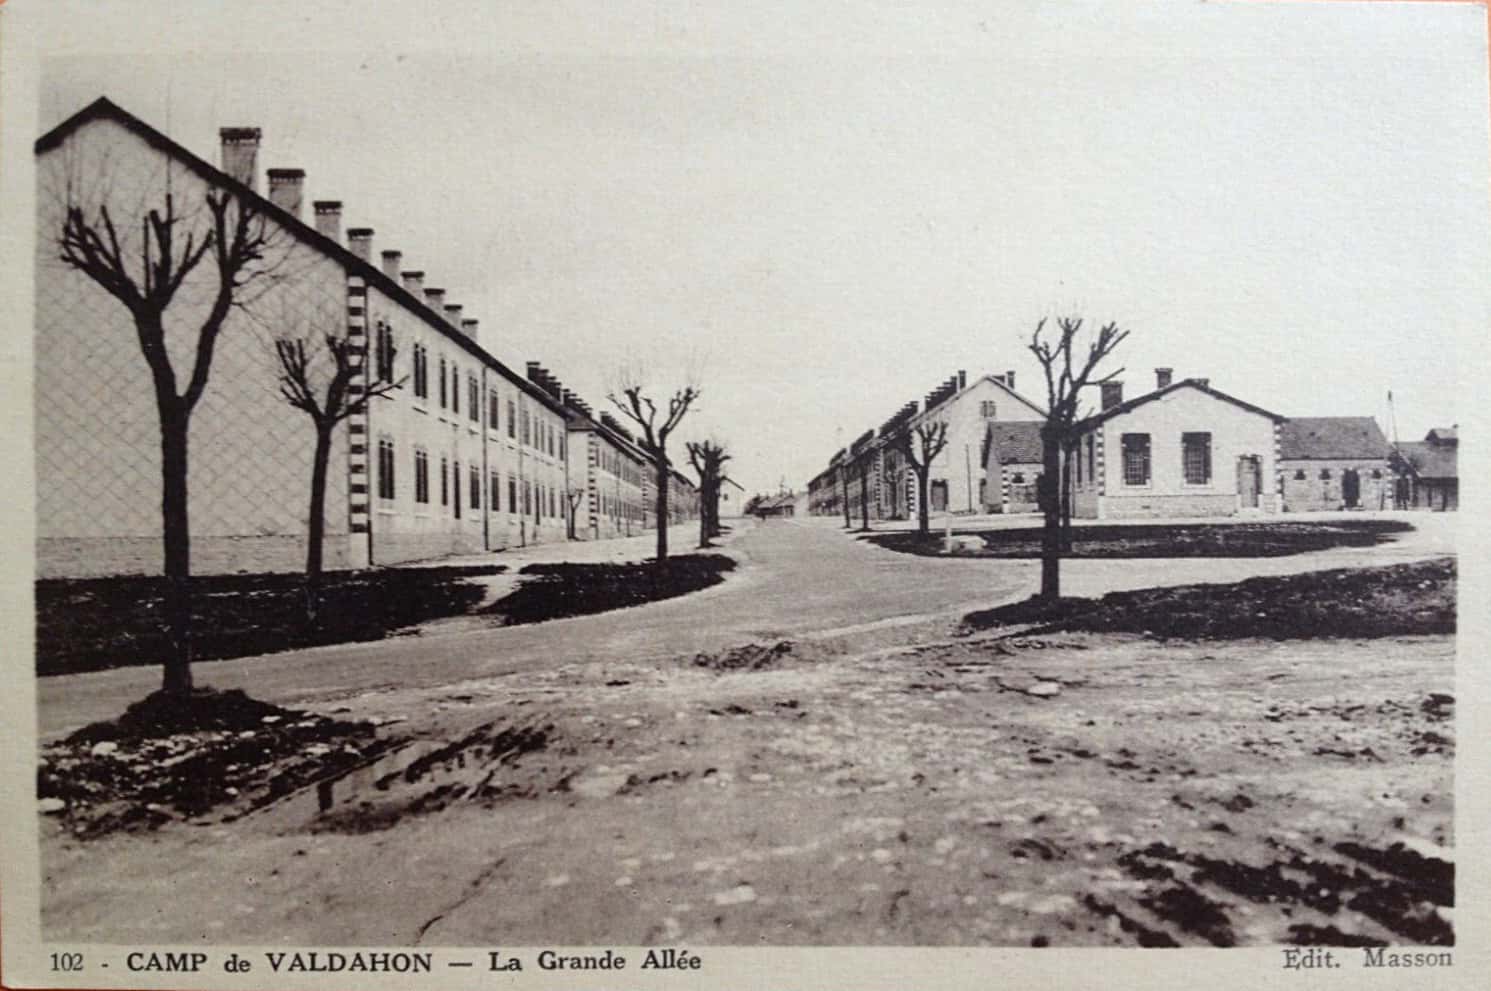 Ligne Maginot - VALDAHON - (Camp de sureté) - La grande allée
Carte postale